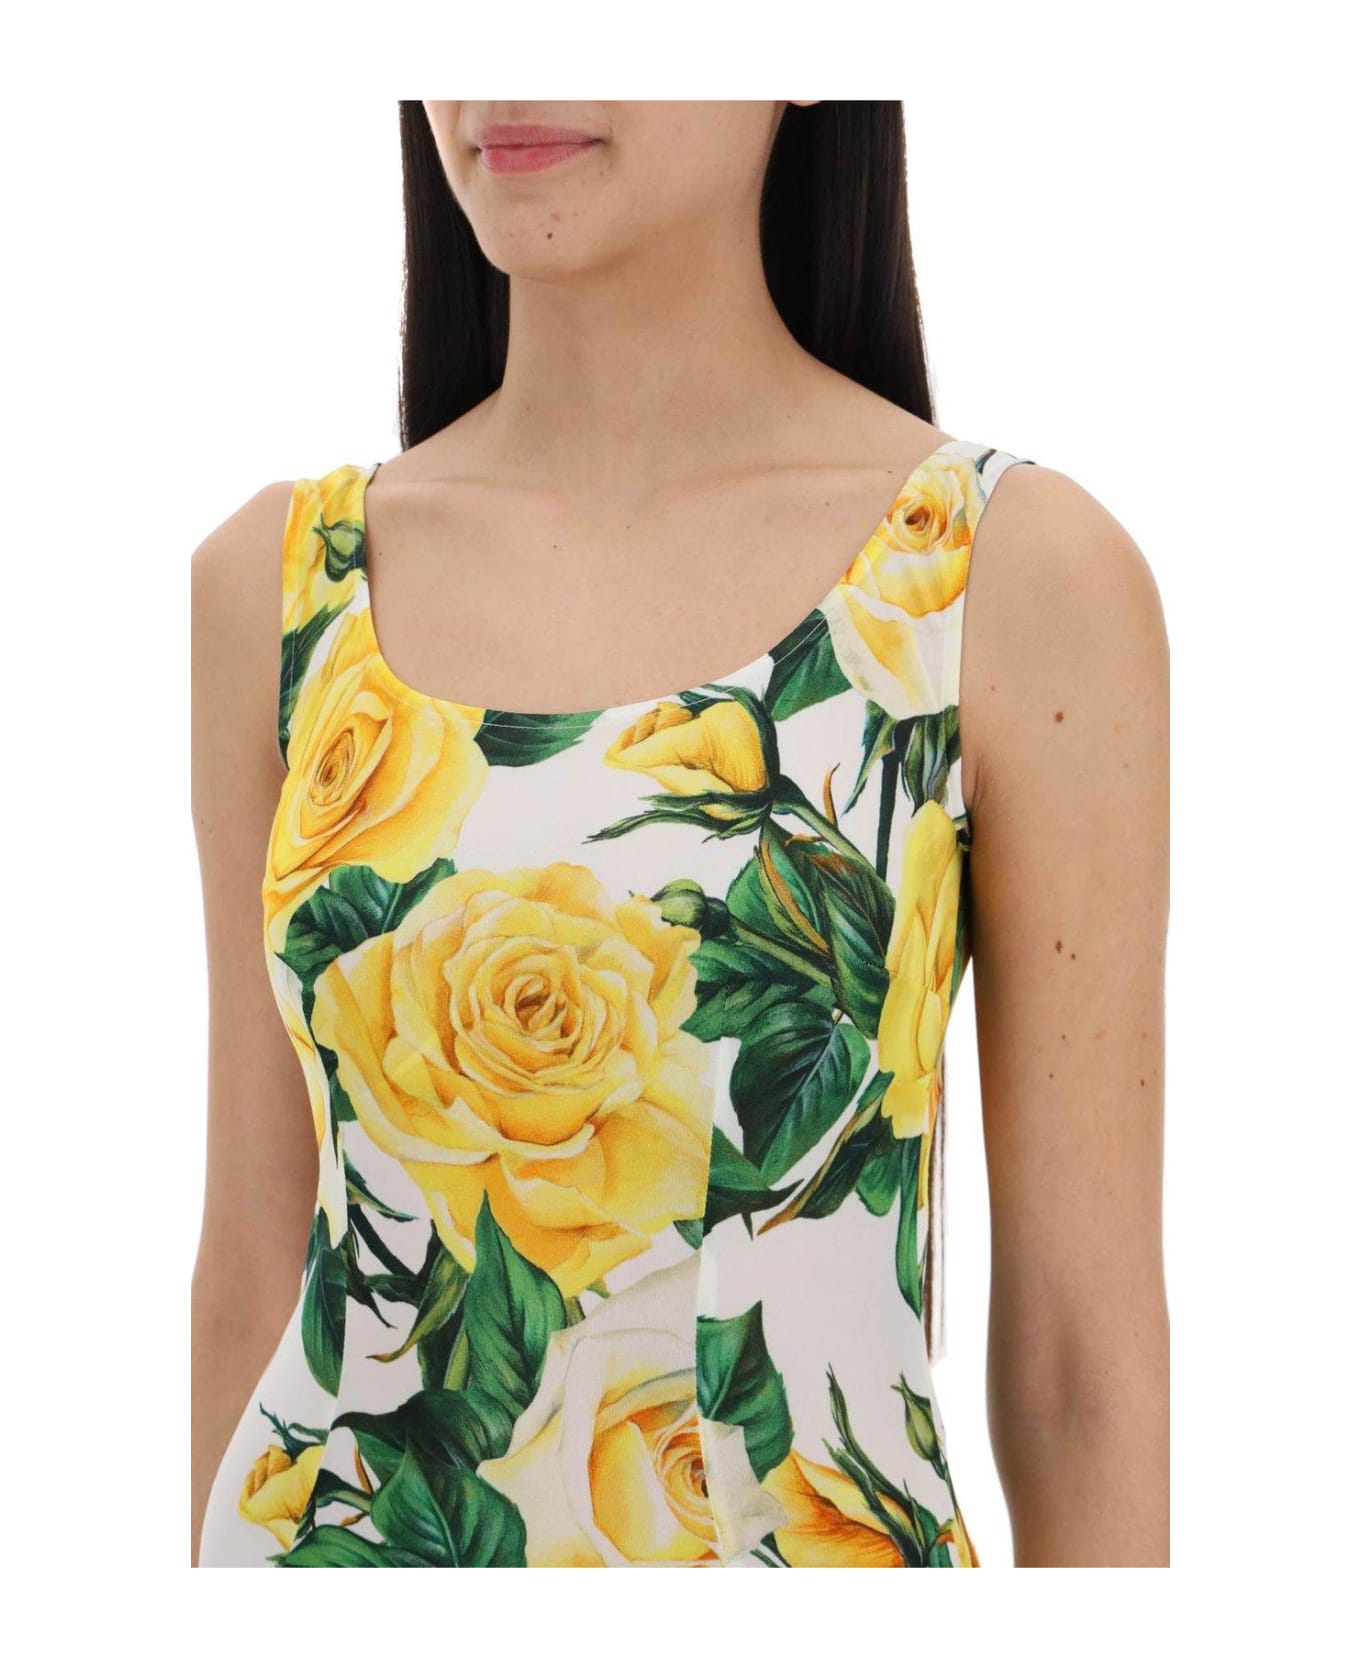 dolce print & Gabbana Sleeveless Midi Dress - Yellow, green, white